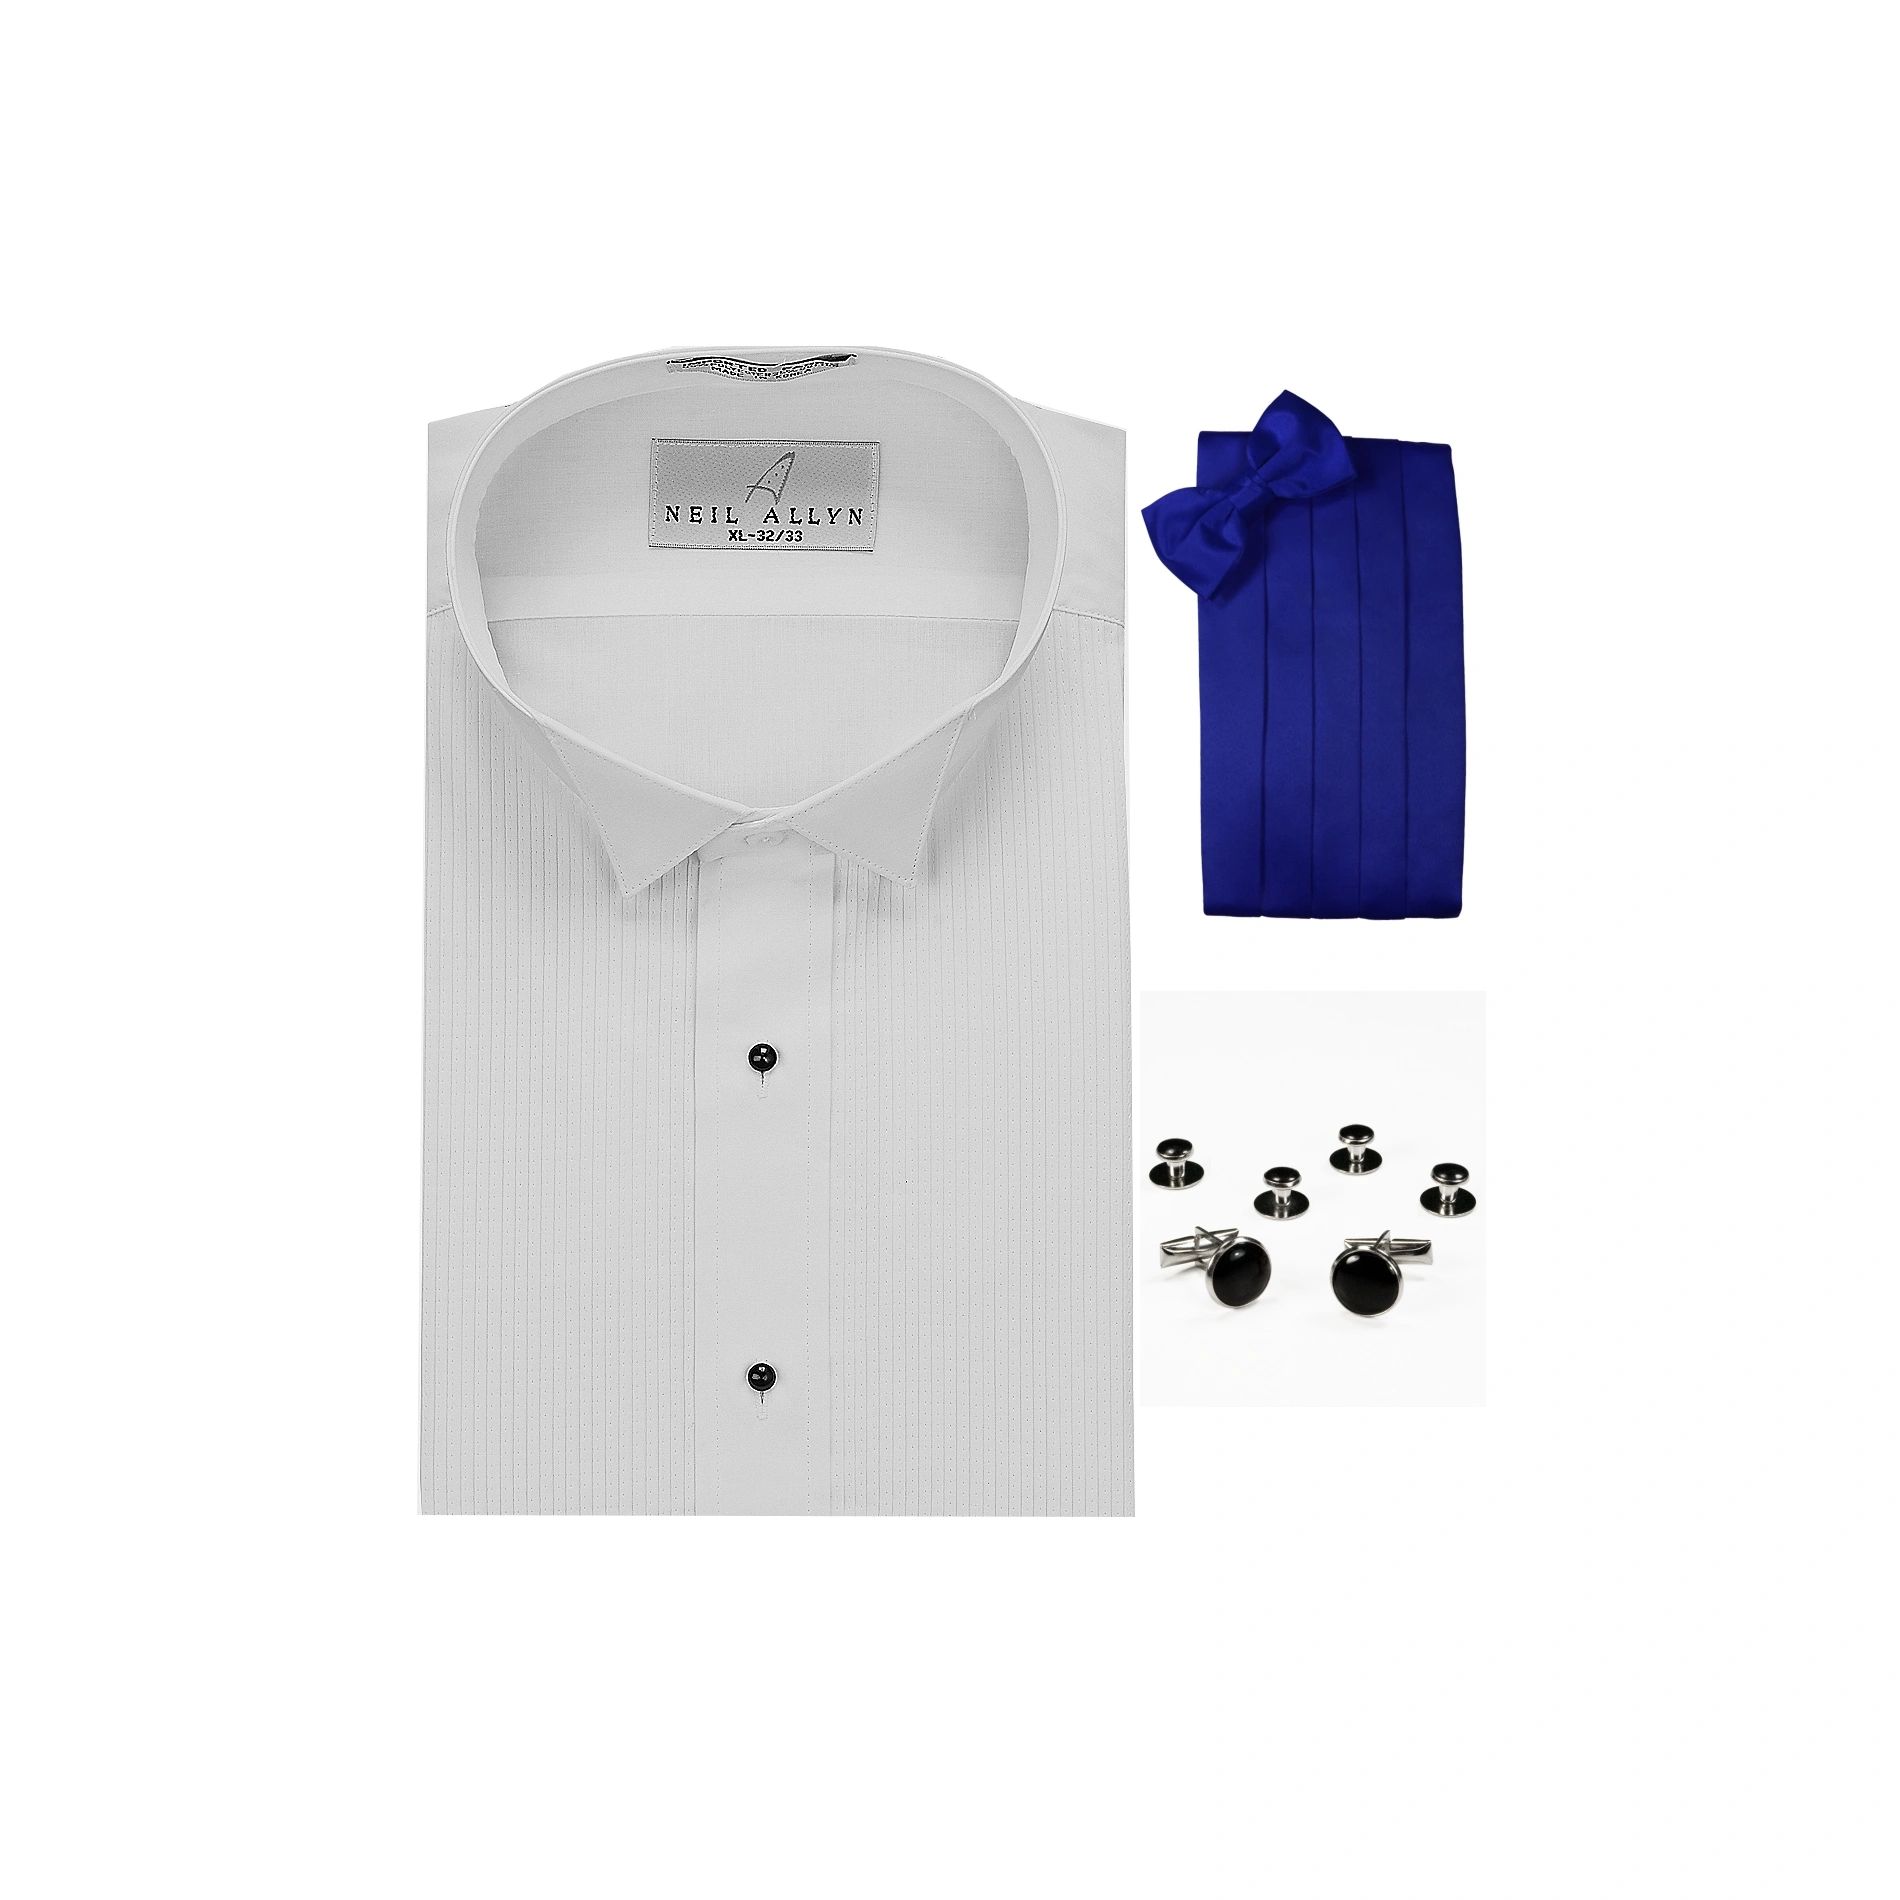 Neil Allyn Wing Collar 1/8" Pleats Formal Tuxedo Shirt, Royal Blue Cummerbund, Bow-Tie, Cuff Links & Studs Set